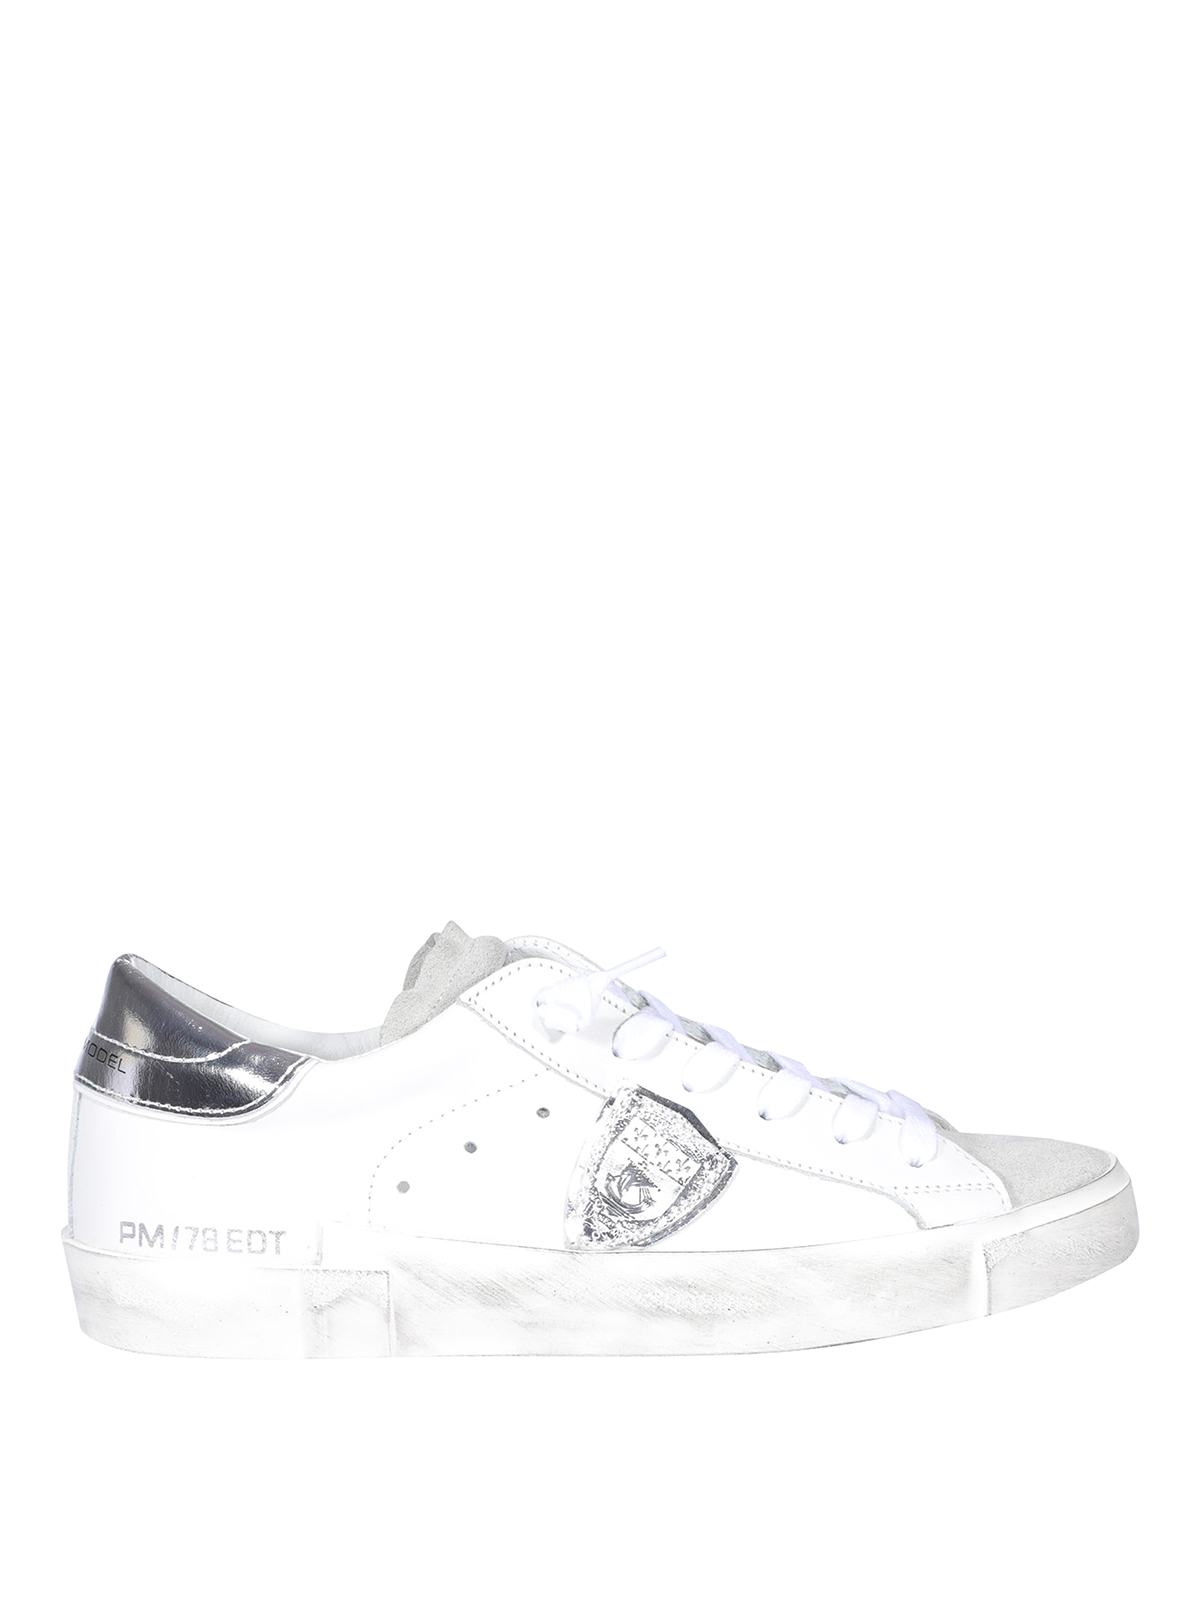 Philippe Model Paris X Sneakers In White